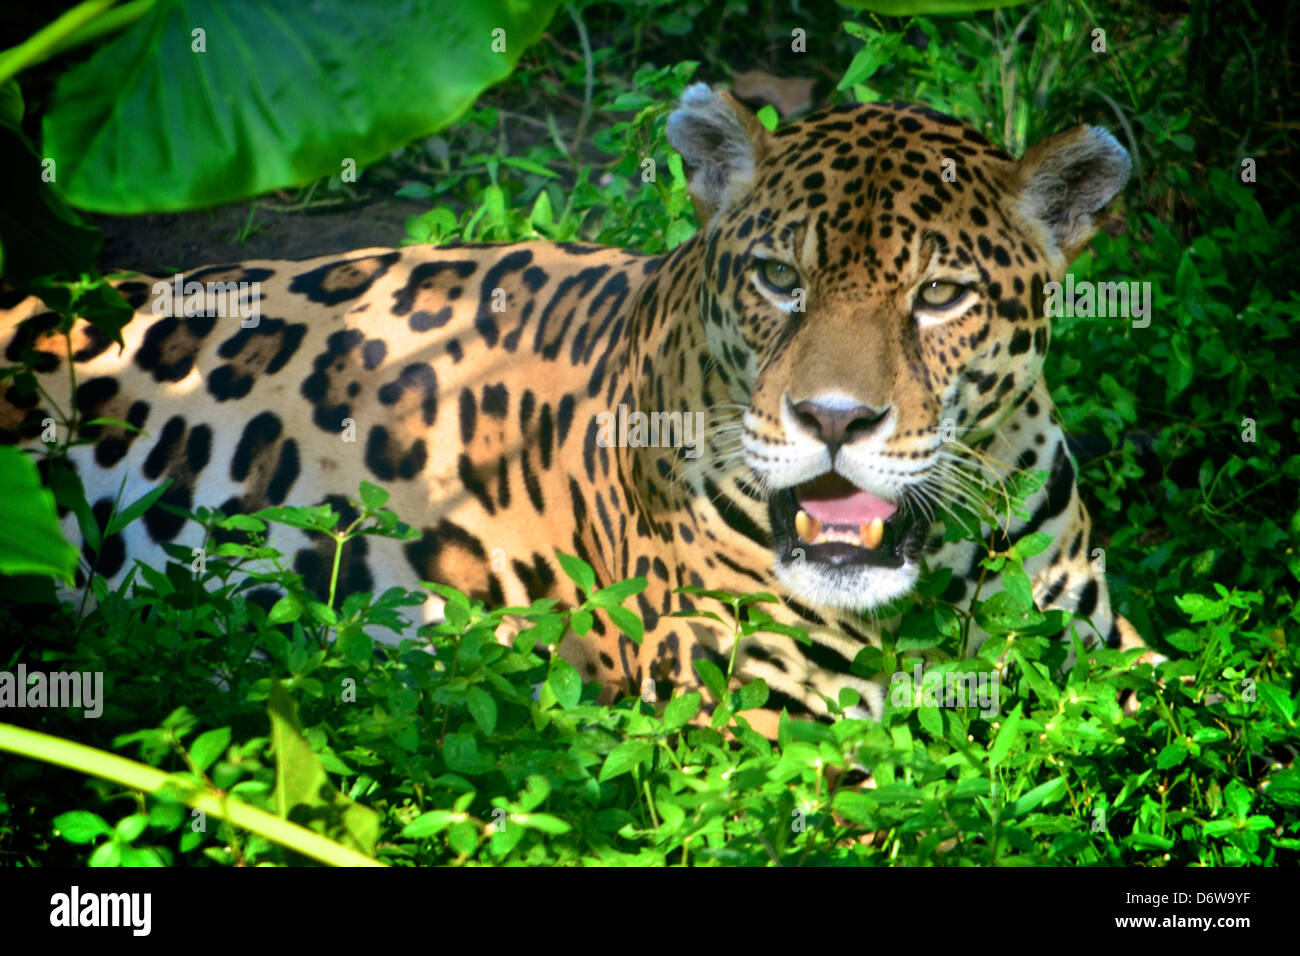 Jaguar on a riverbank in the Amazon rainforest Stock Photo - Alamy